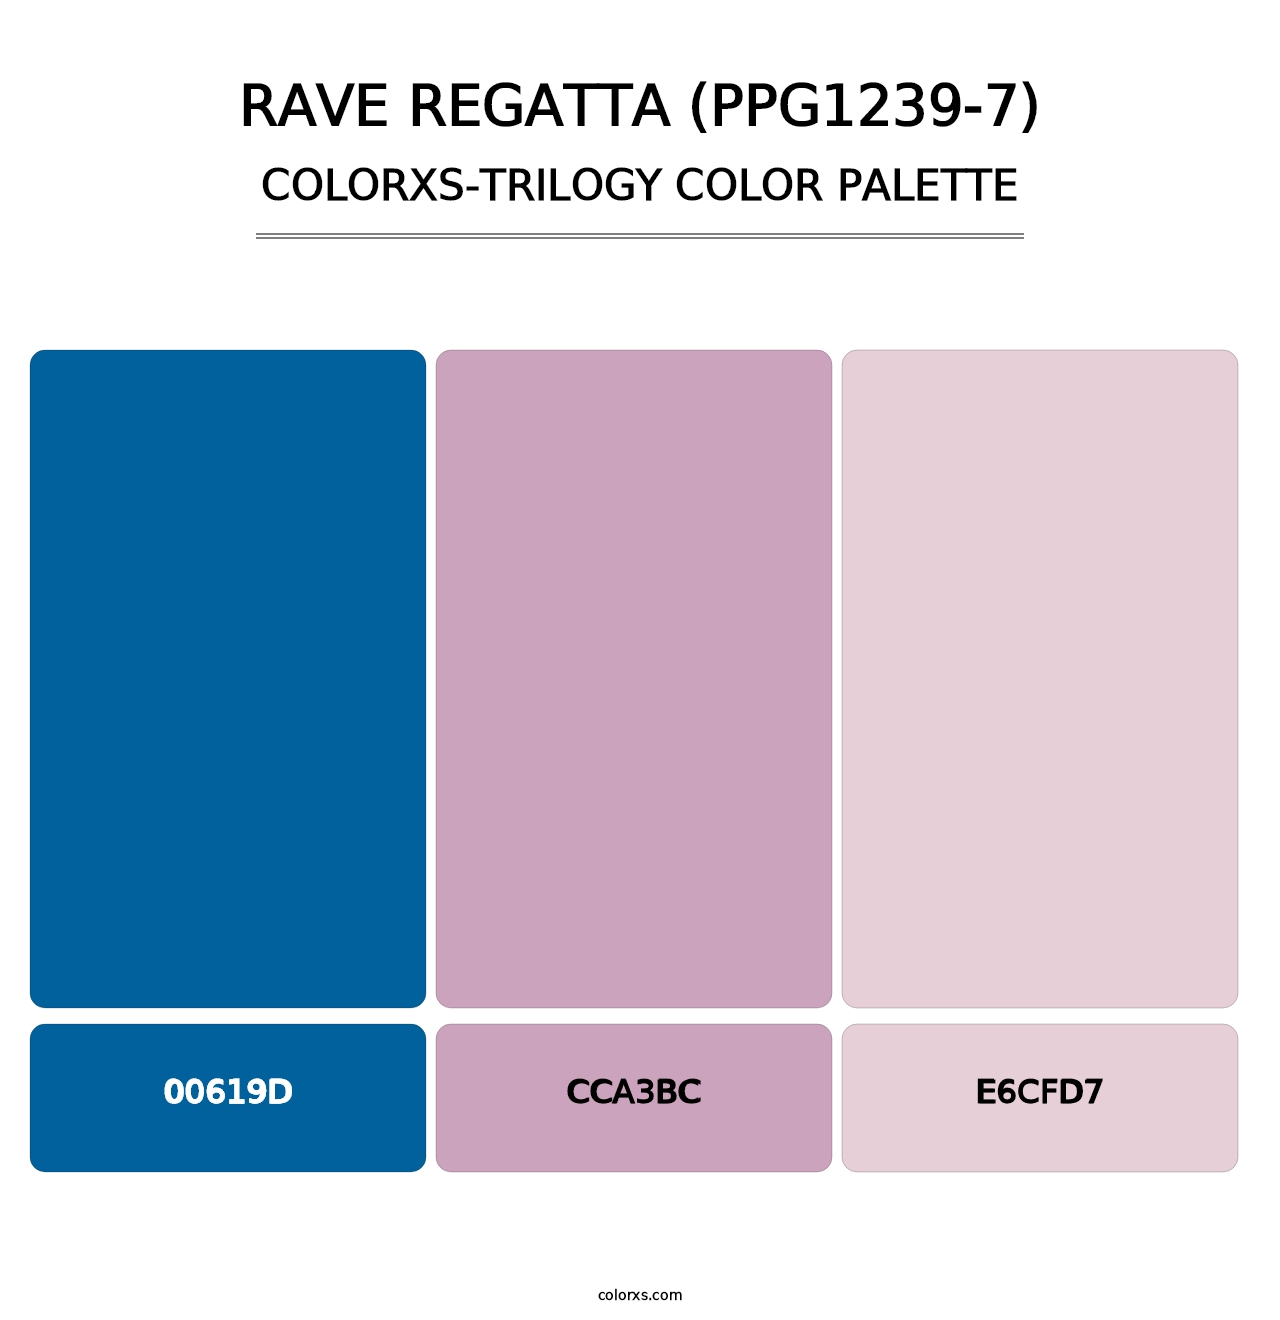 Rave Regatta (PPG1239-7) - Colorxs Trilogy Palette